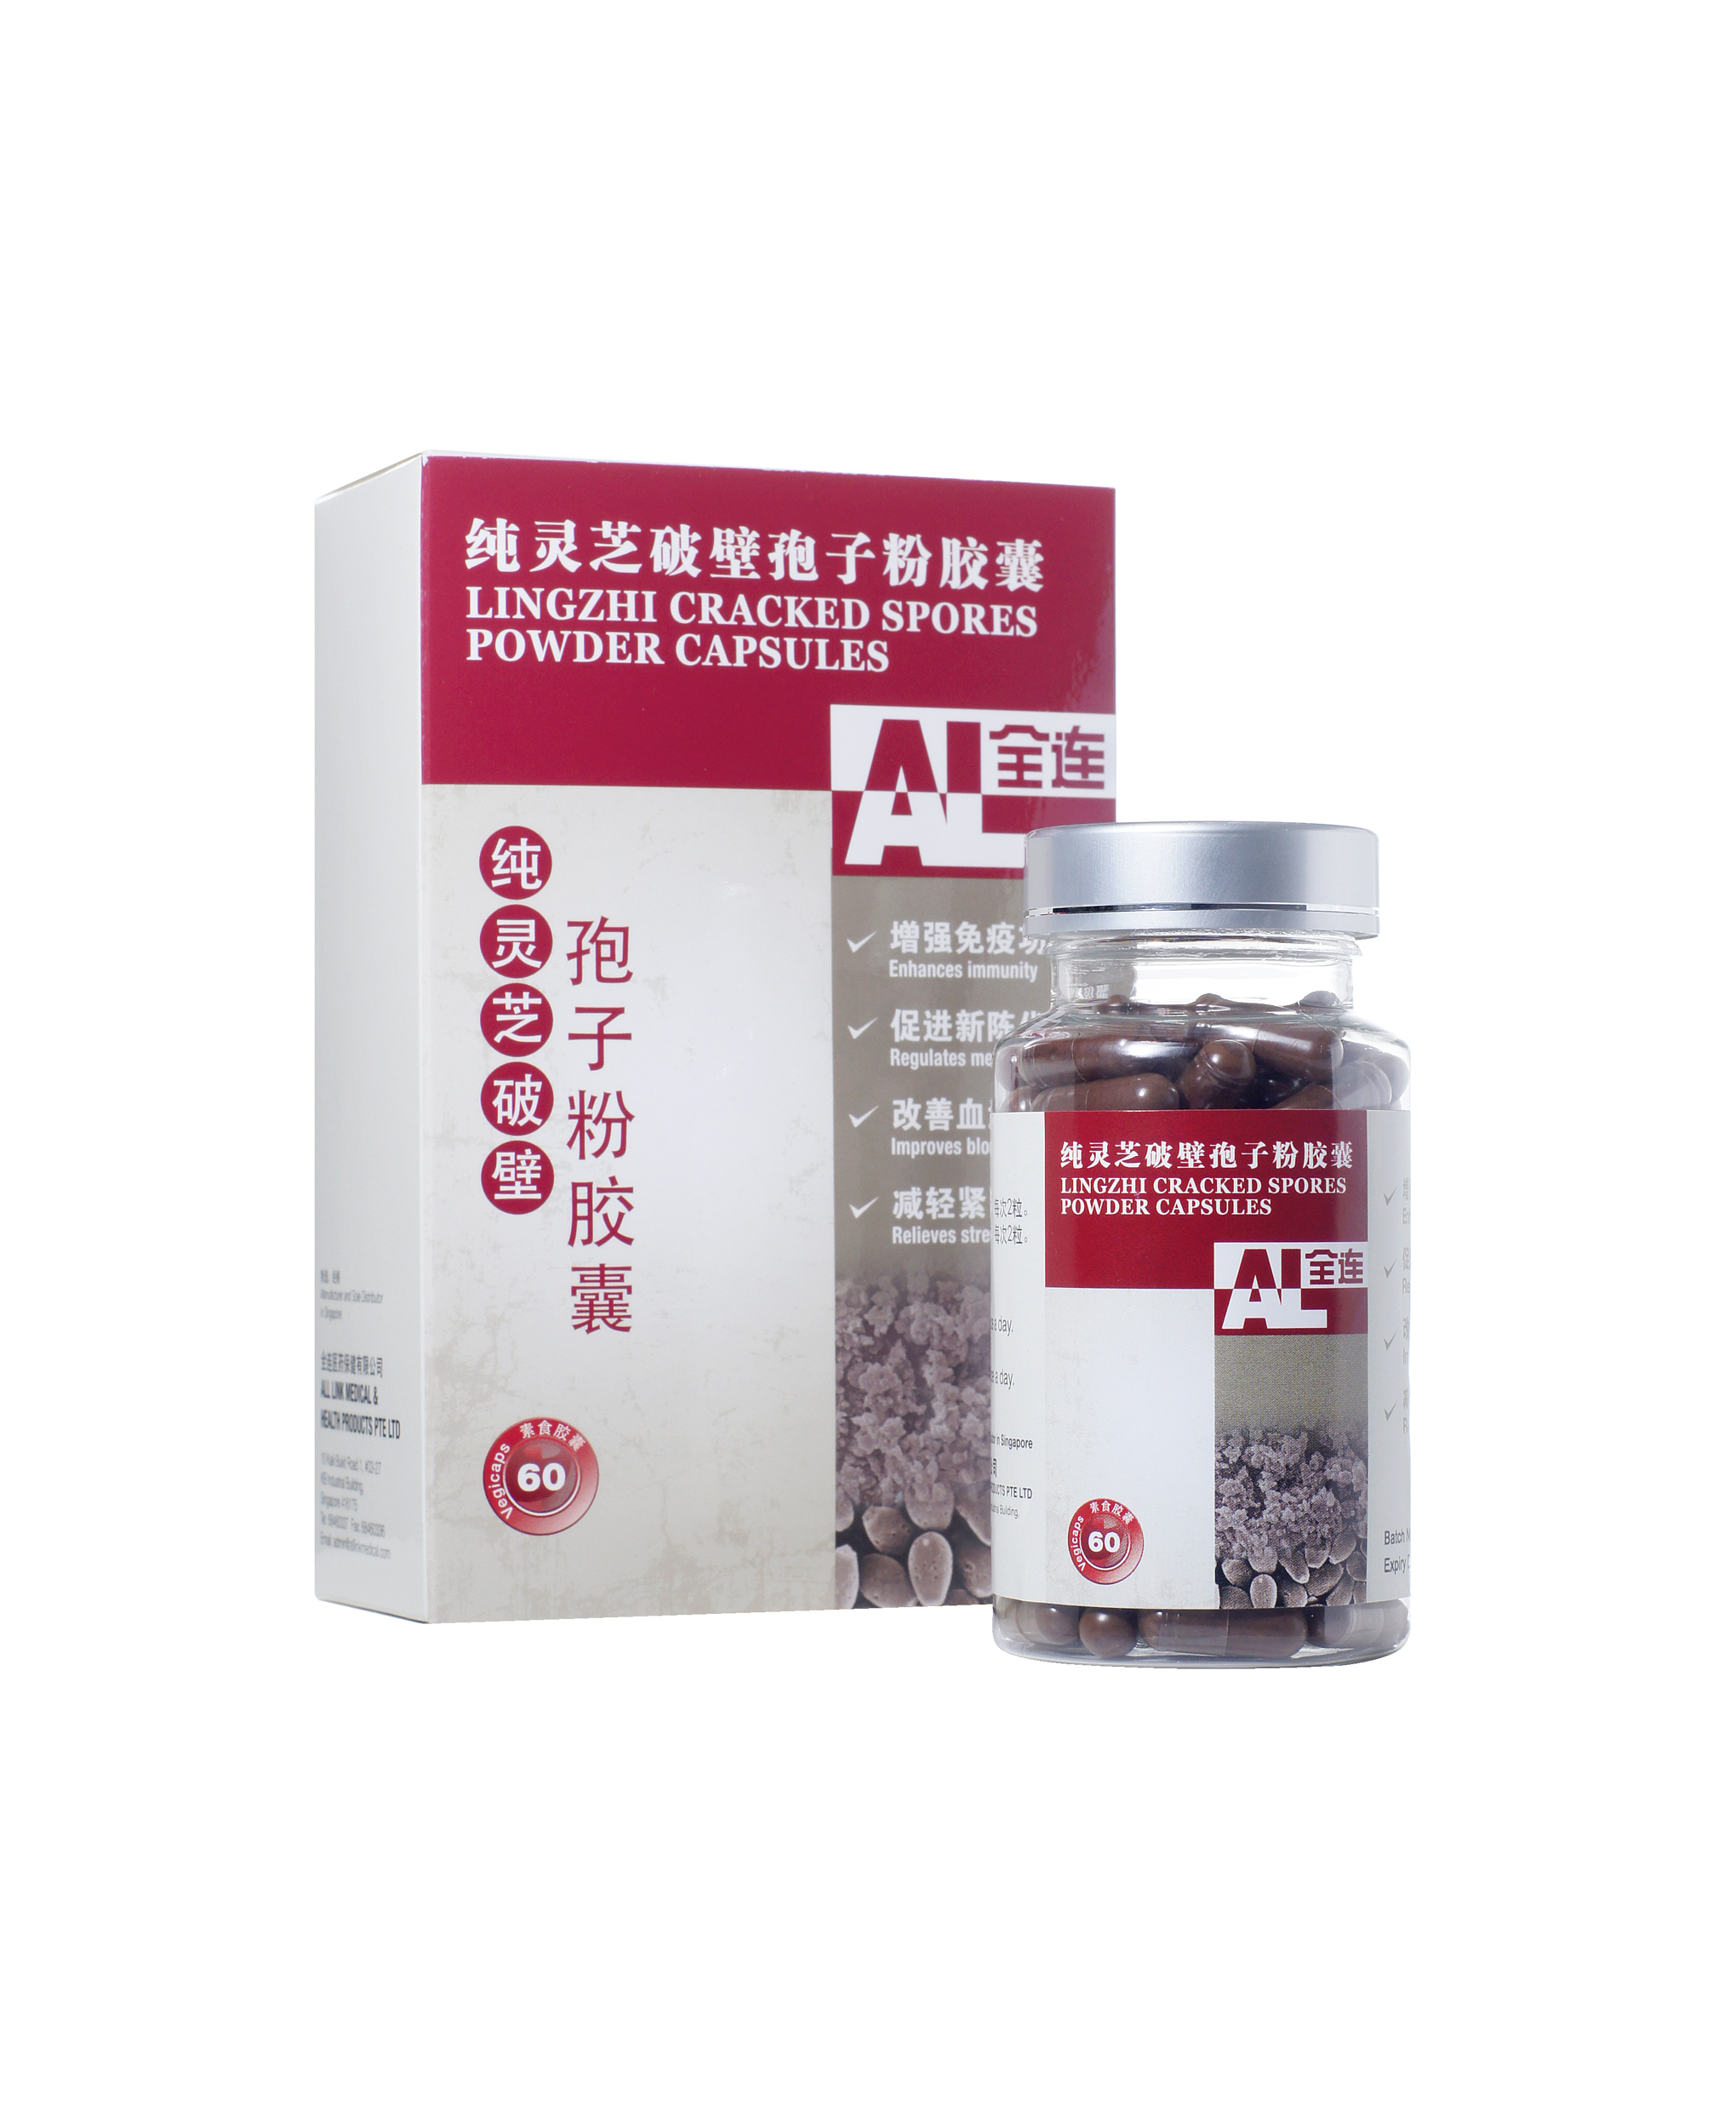 Lingzhi Cracked Spores Powder Capsules (60 capsules